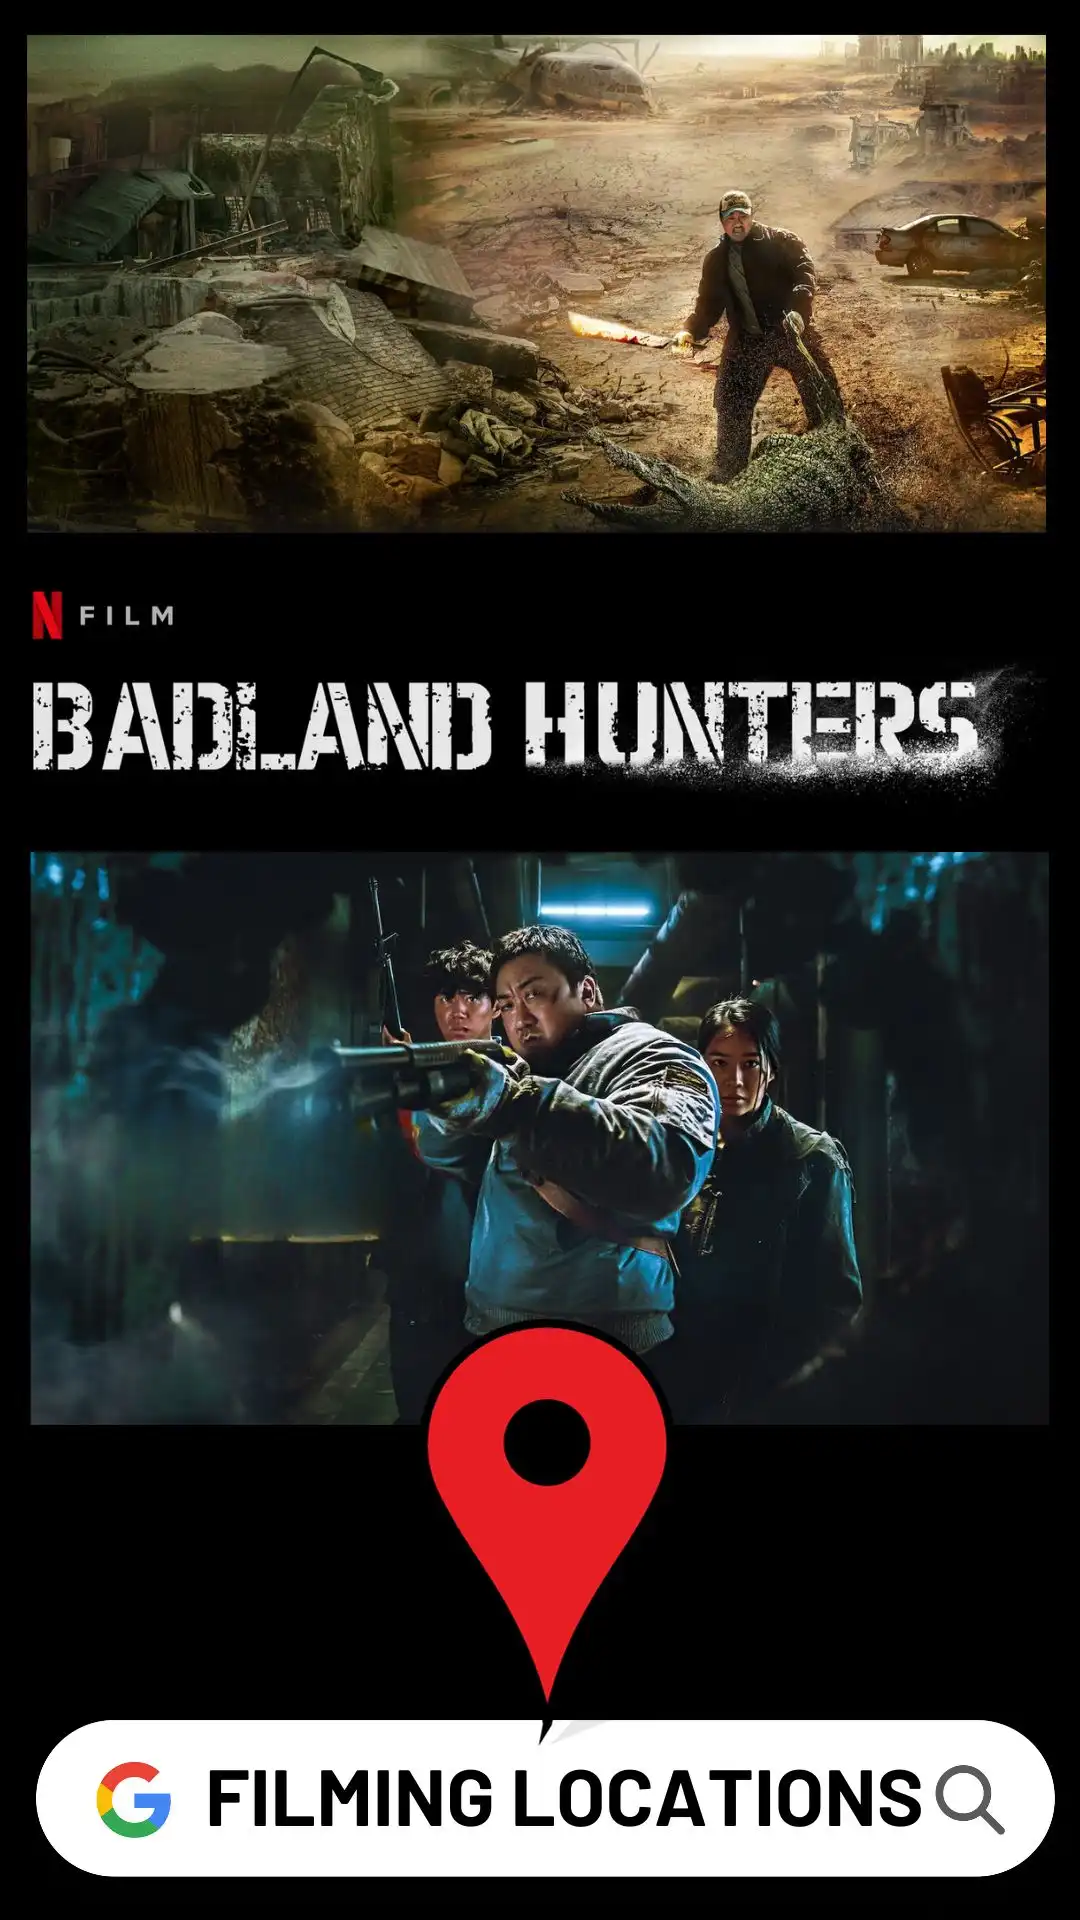 Badland Hunters Filming Locations